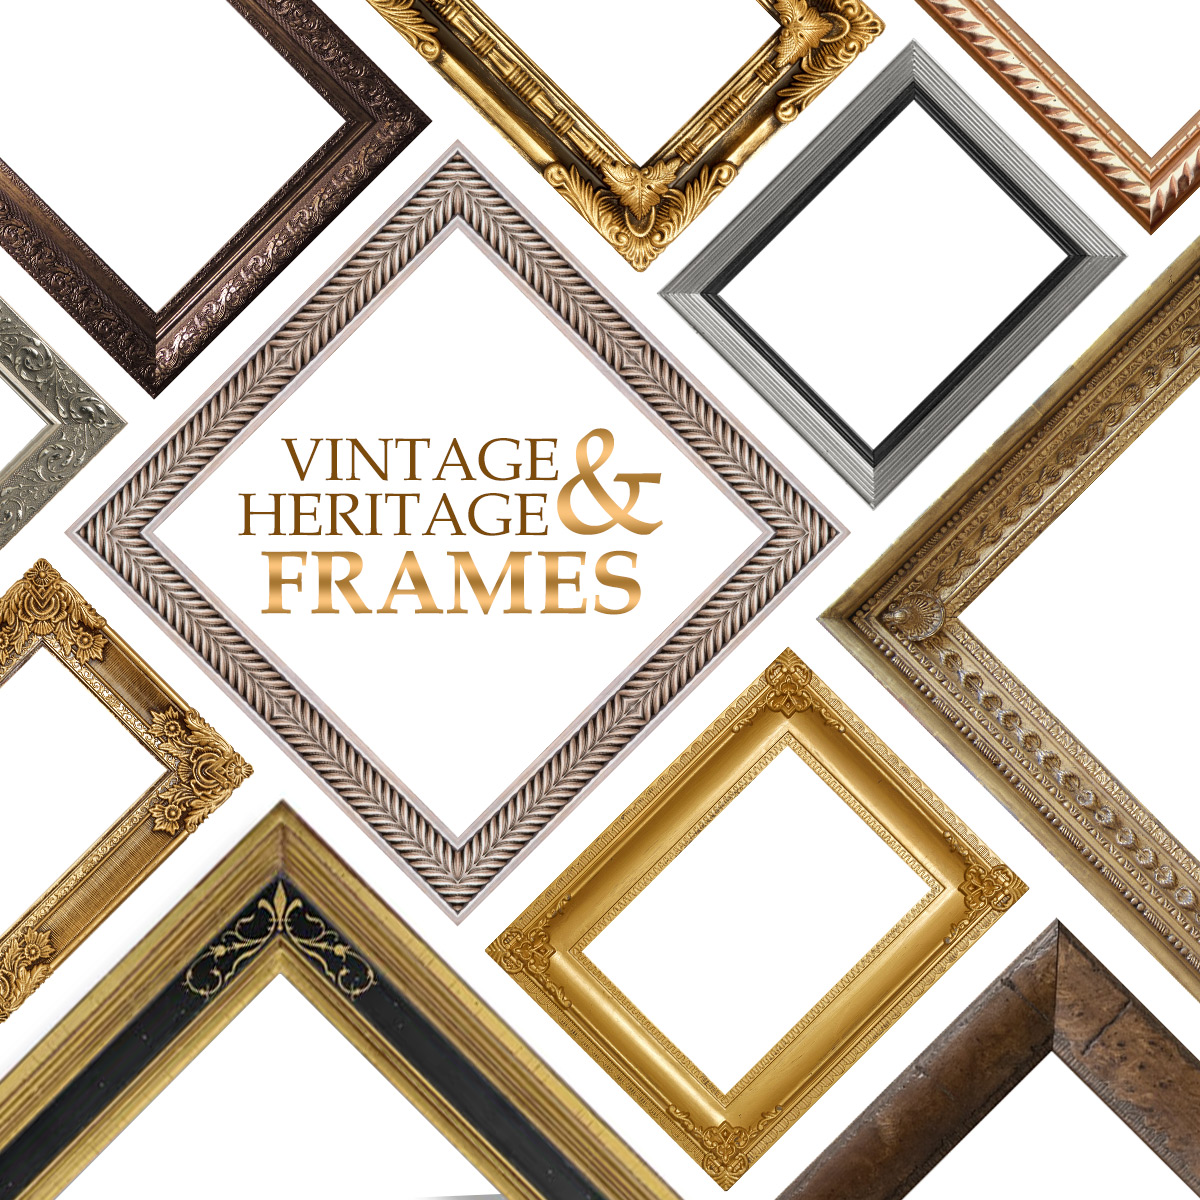 vintage or heritage: image of various frames